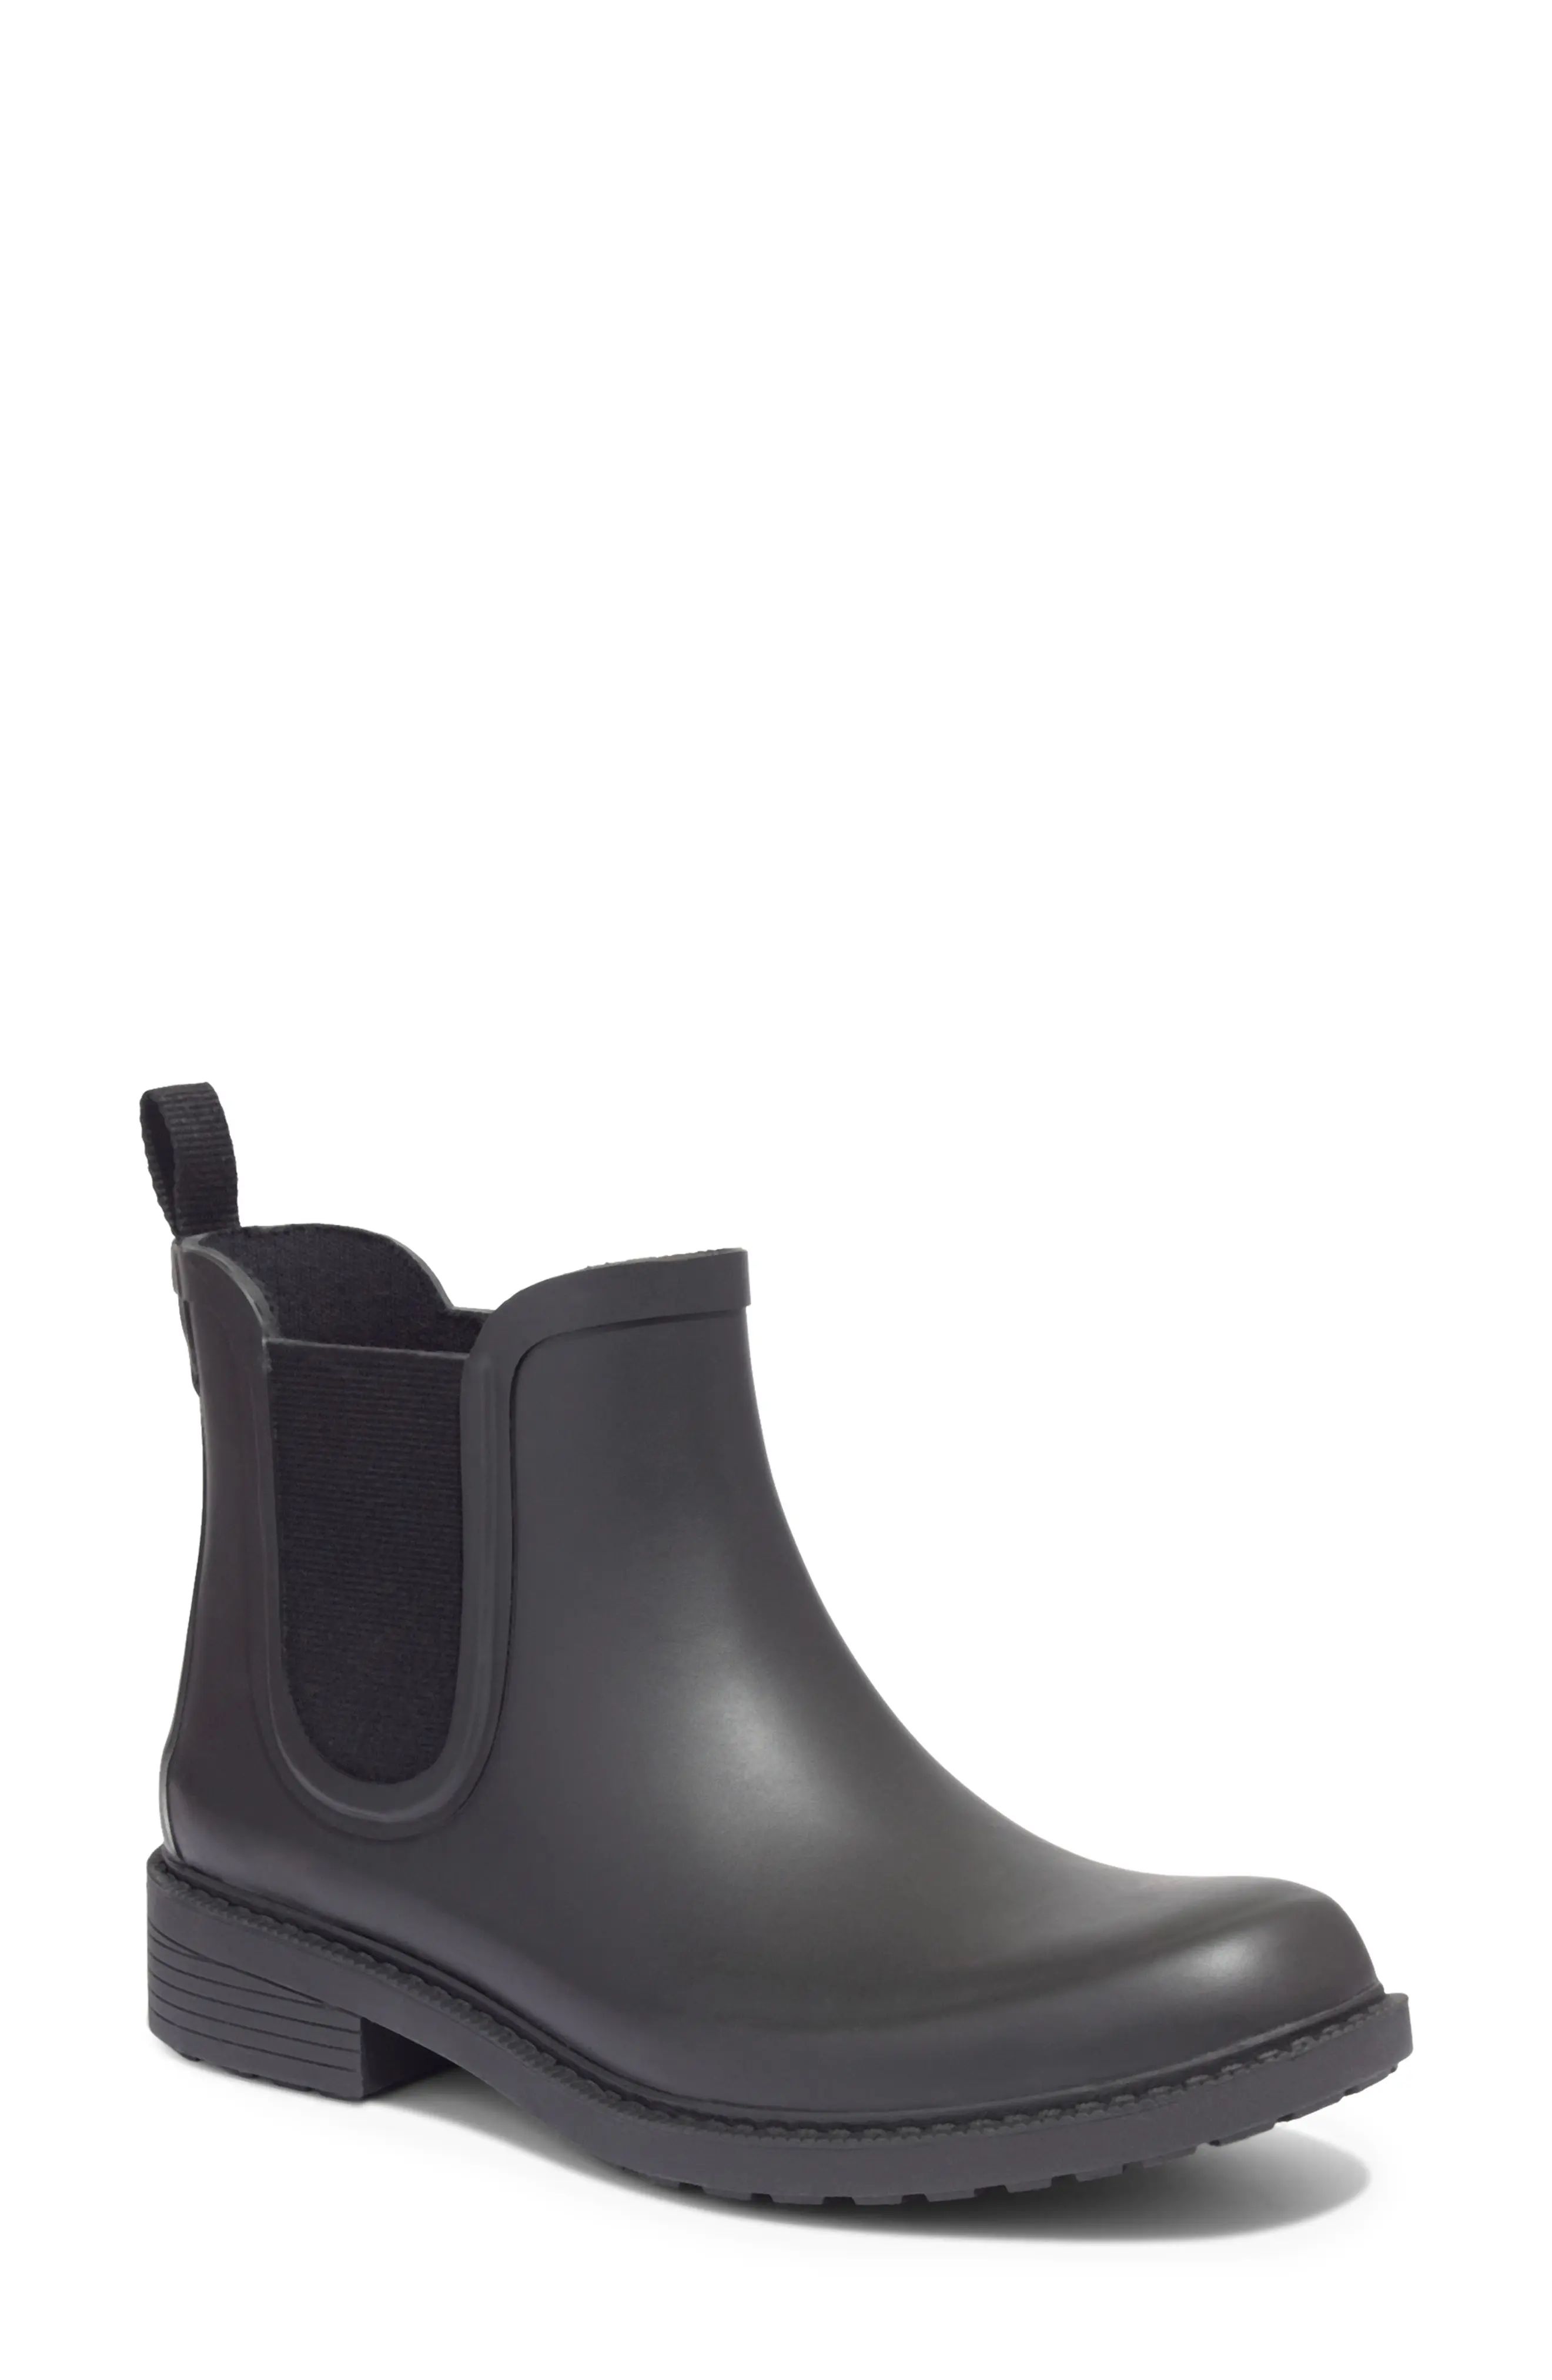 Women's Madewell The Chelsea Rain Boot, Size 6 M - Black | Nordstrom